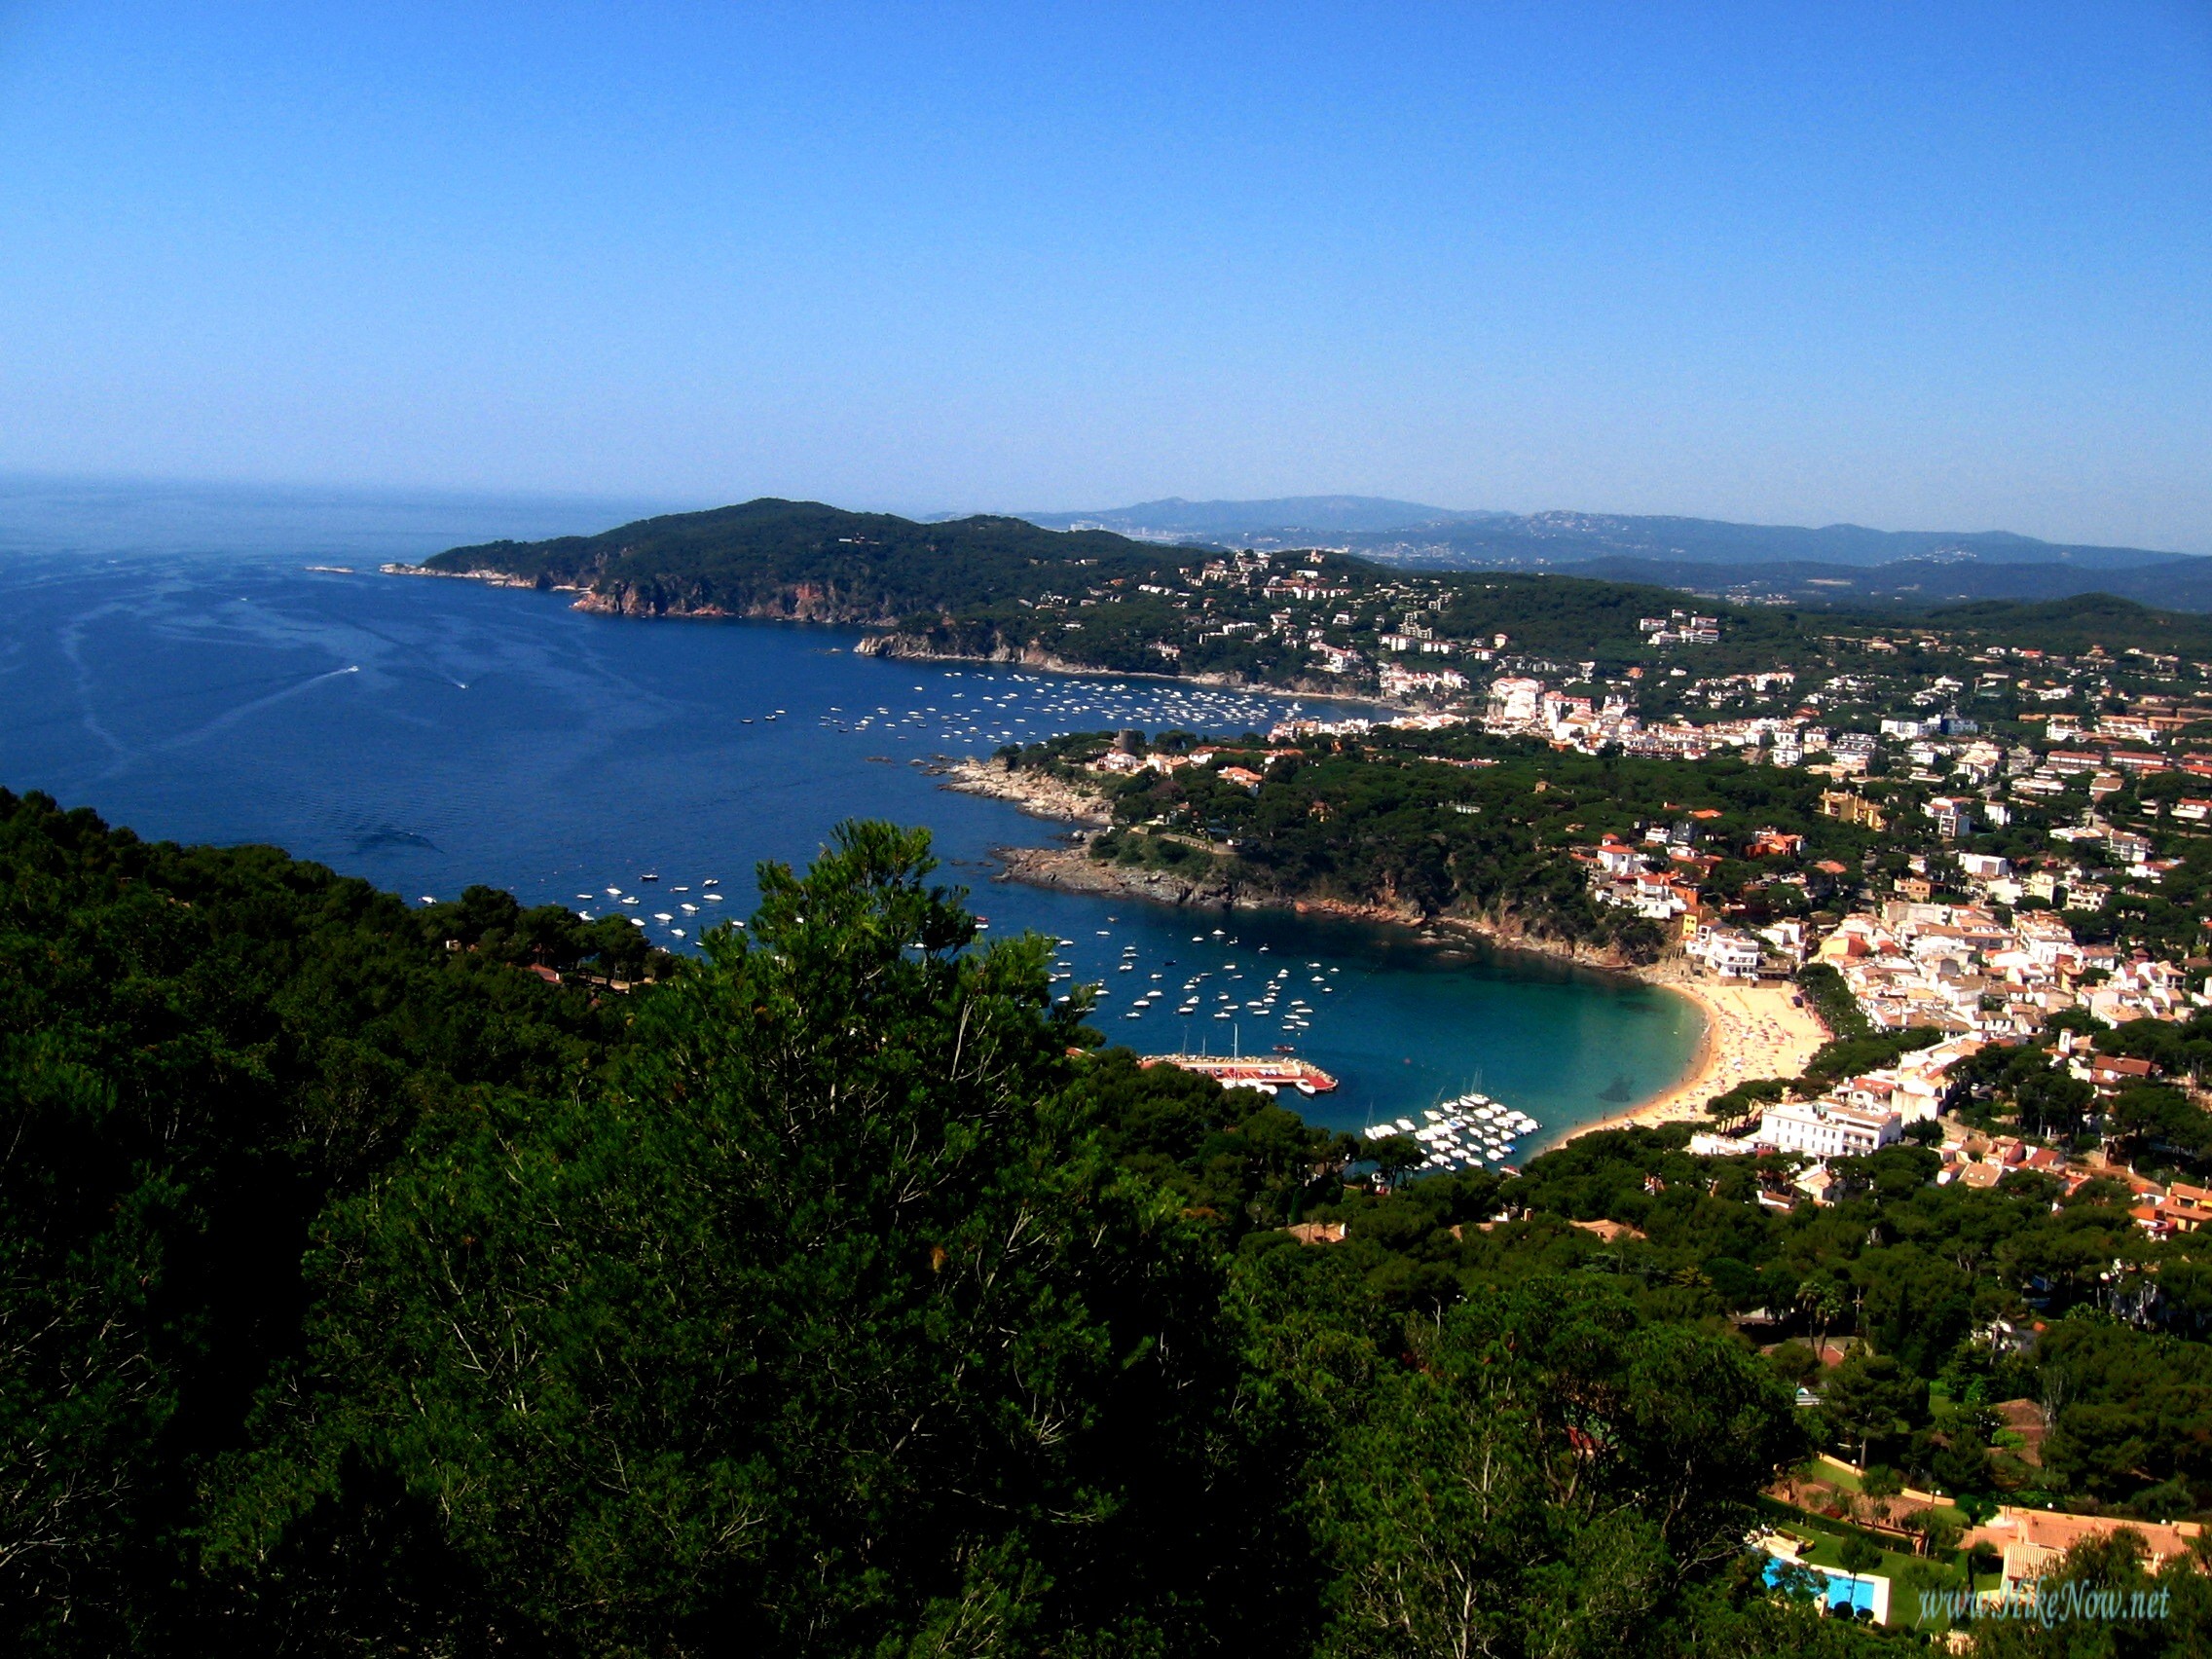 View to the coast and beaches of Tamariu - Costa Brava, Spain 